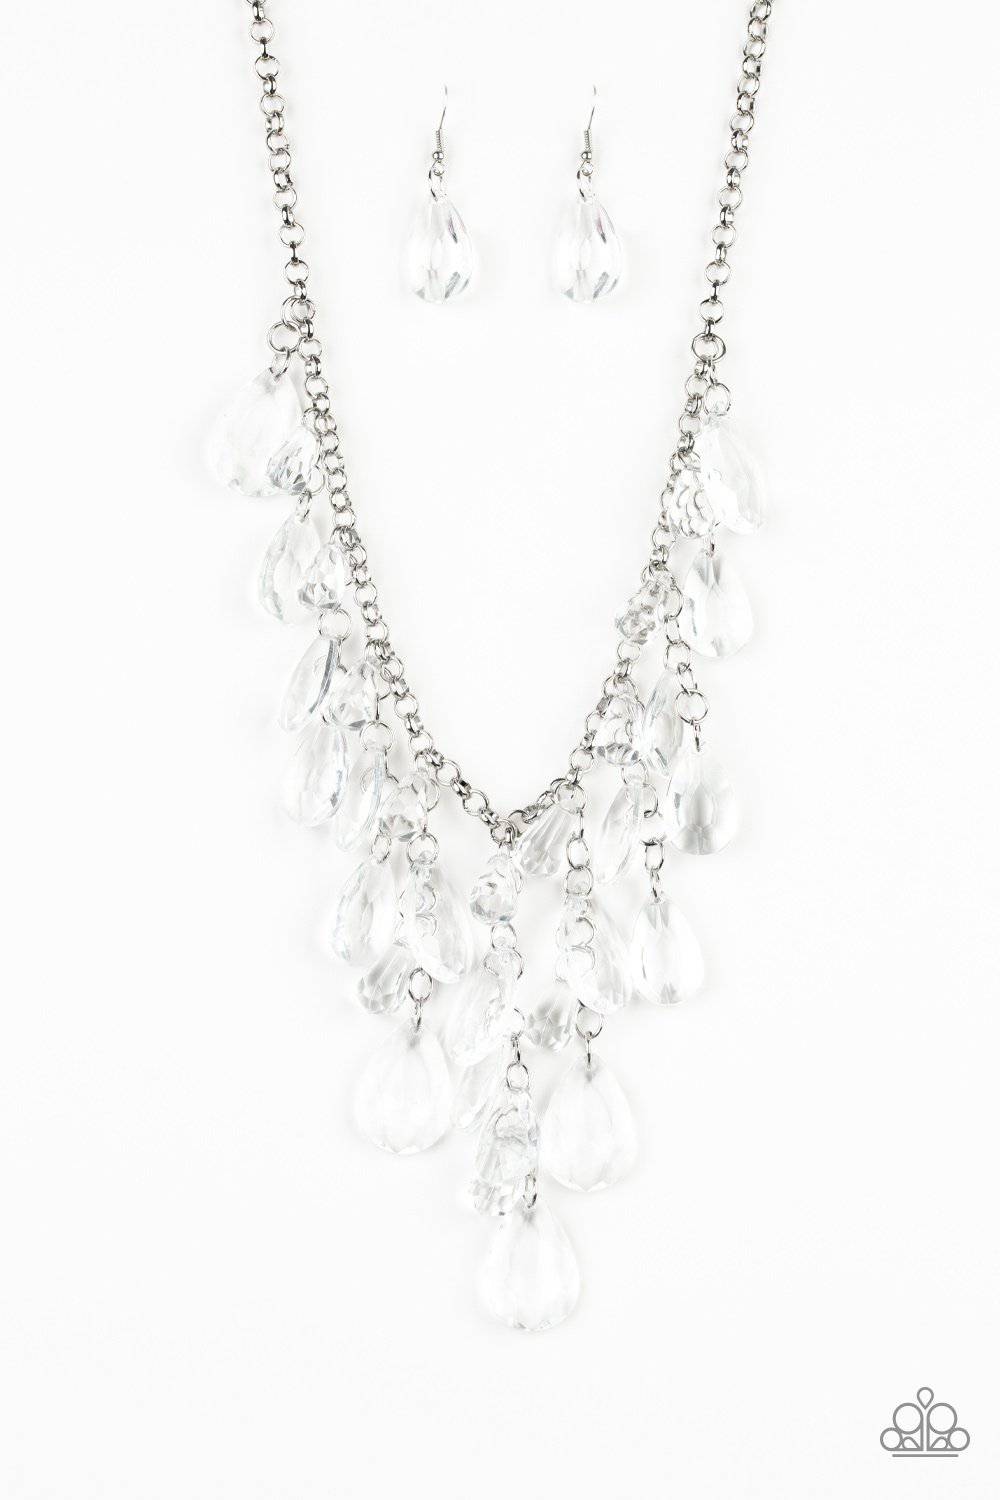 Irresistible Iridescence - White Necklace - Paparazzi Accessories - GlaMarous Titi Jewels